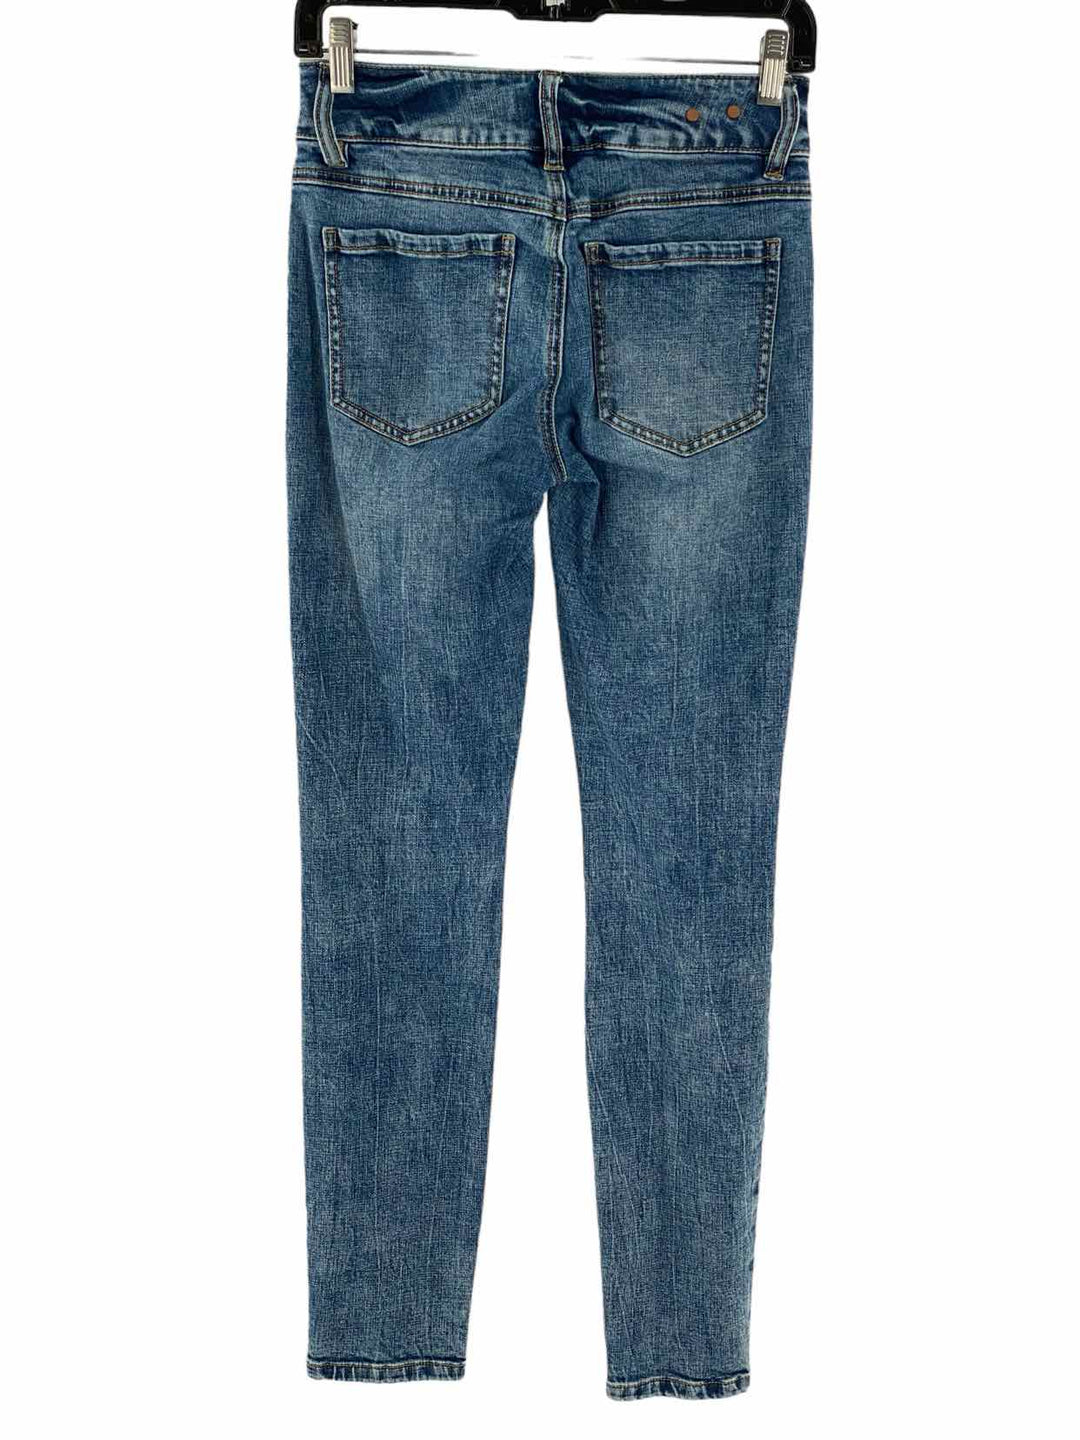 Cabi Size 0 Jeans